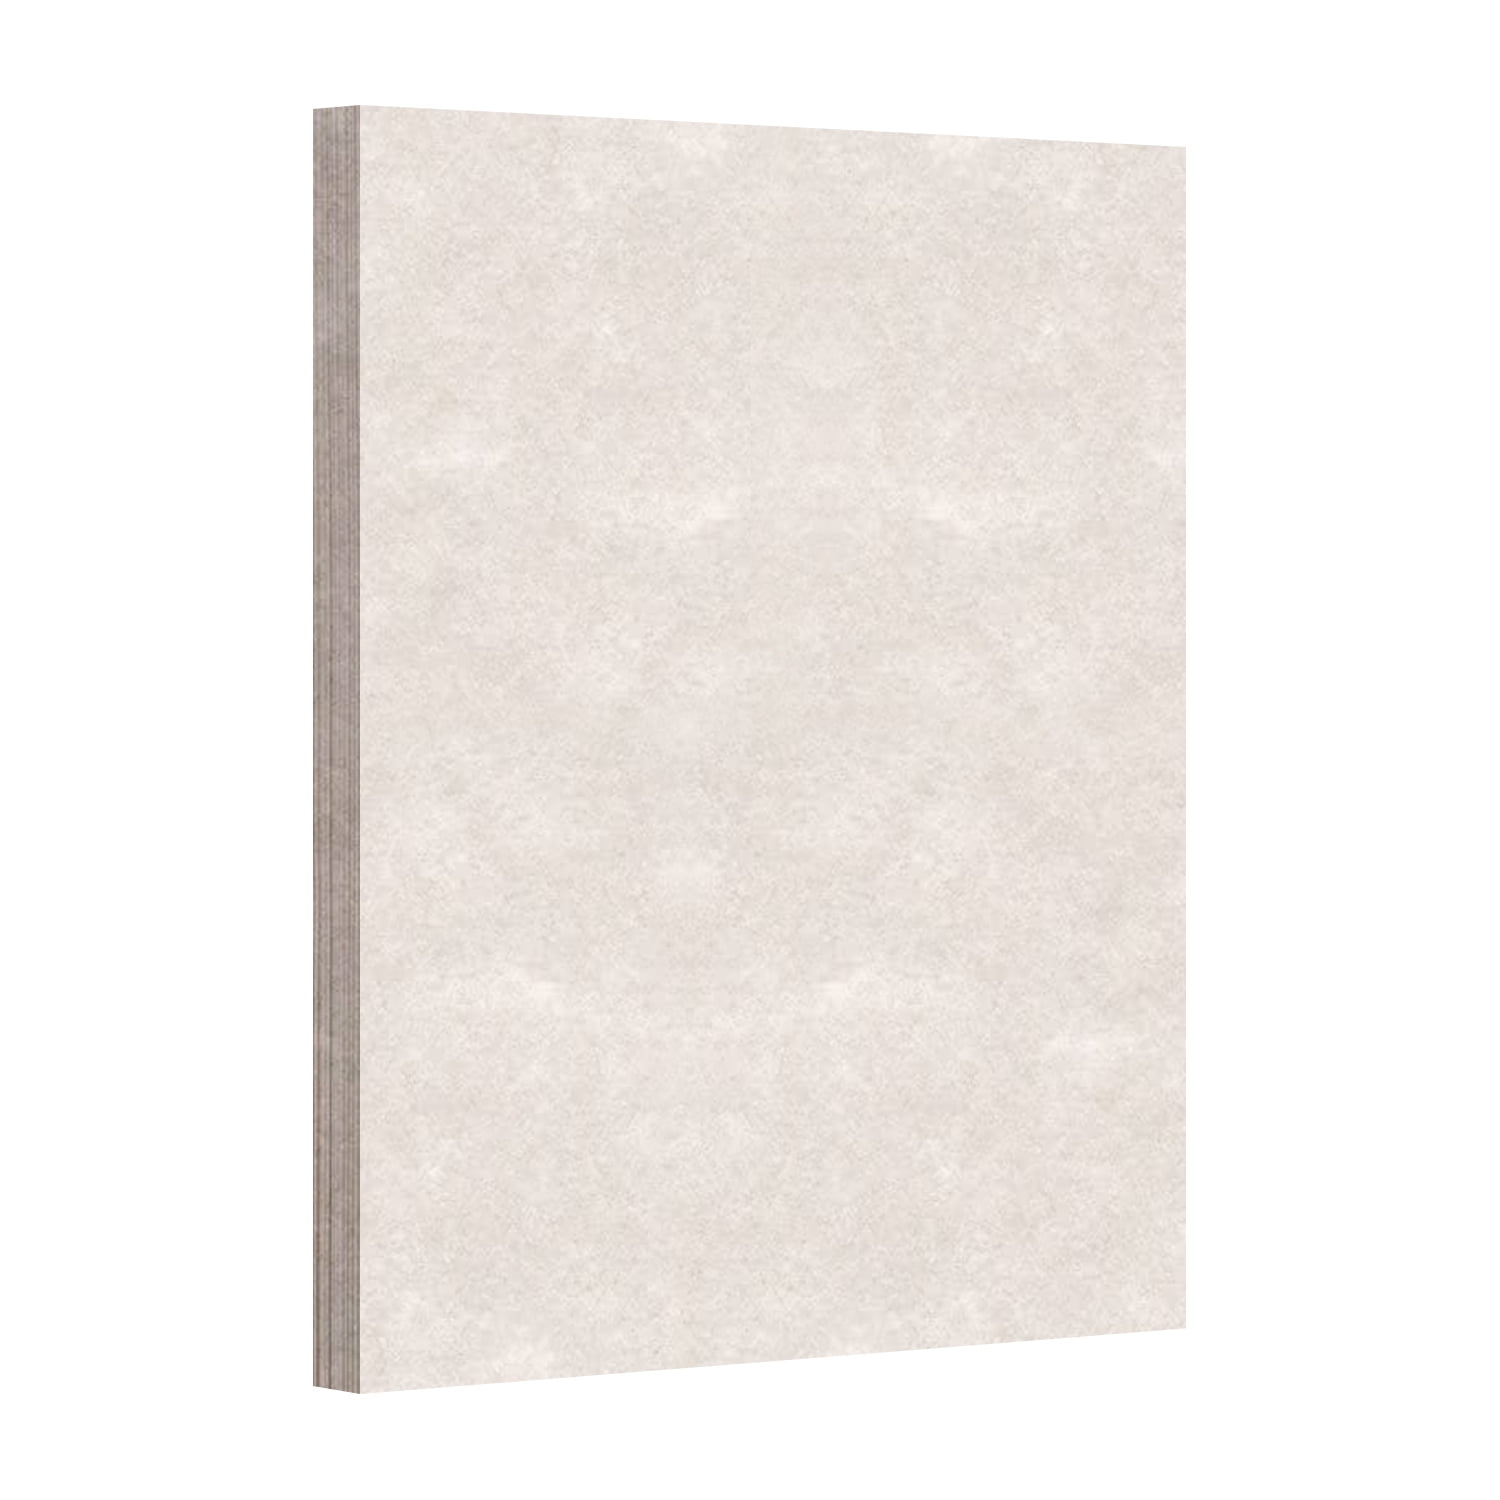 Natural Parchment Paper – Great for Certificates, Menus and Wedding  Invitations | 24lb Bond, 60lb Text (90gsm) | 8.5 x 11” | 1 Ream – 500  Sheets per